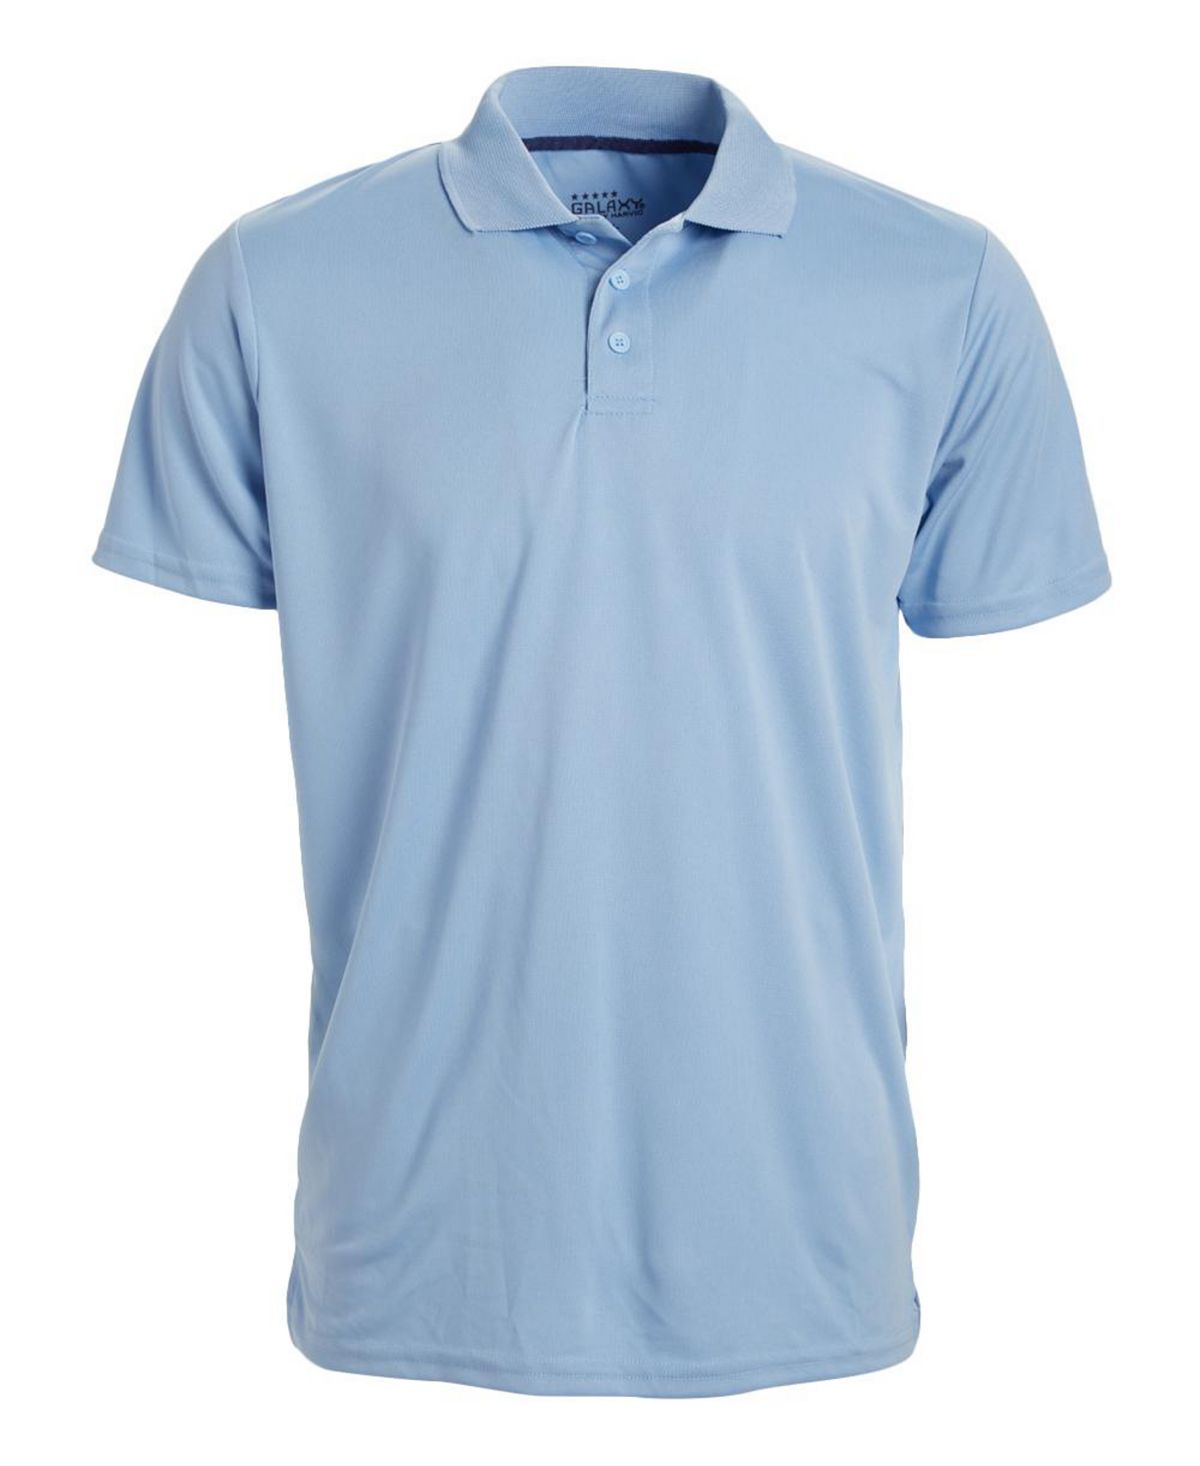 цена Мужская влагоотводящая рубашка поло сухой посадки без тегов Galaxy By Harvic, светло-синий